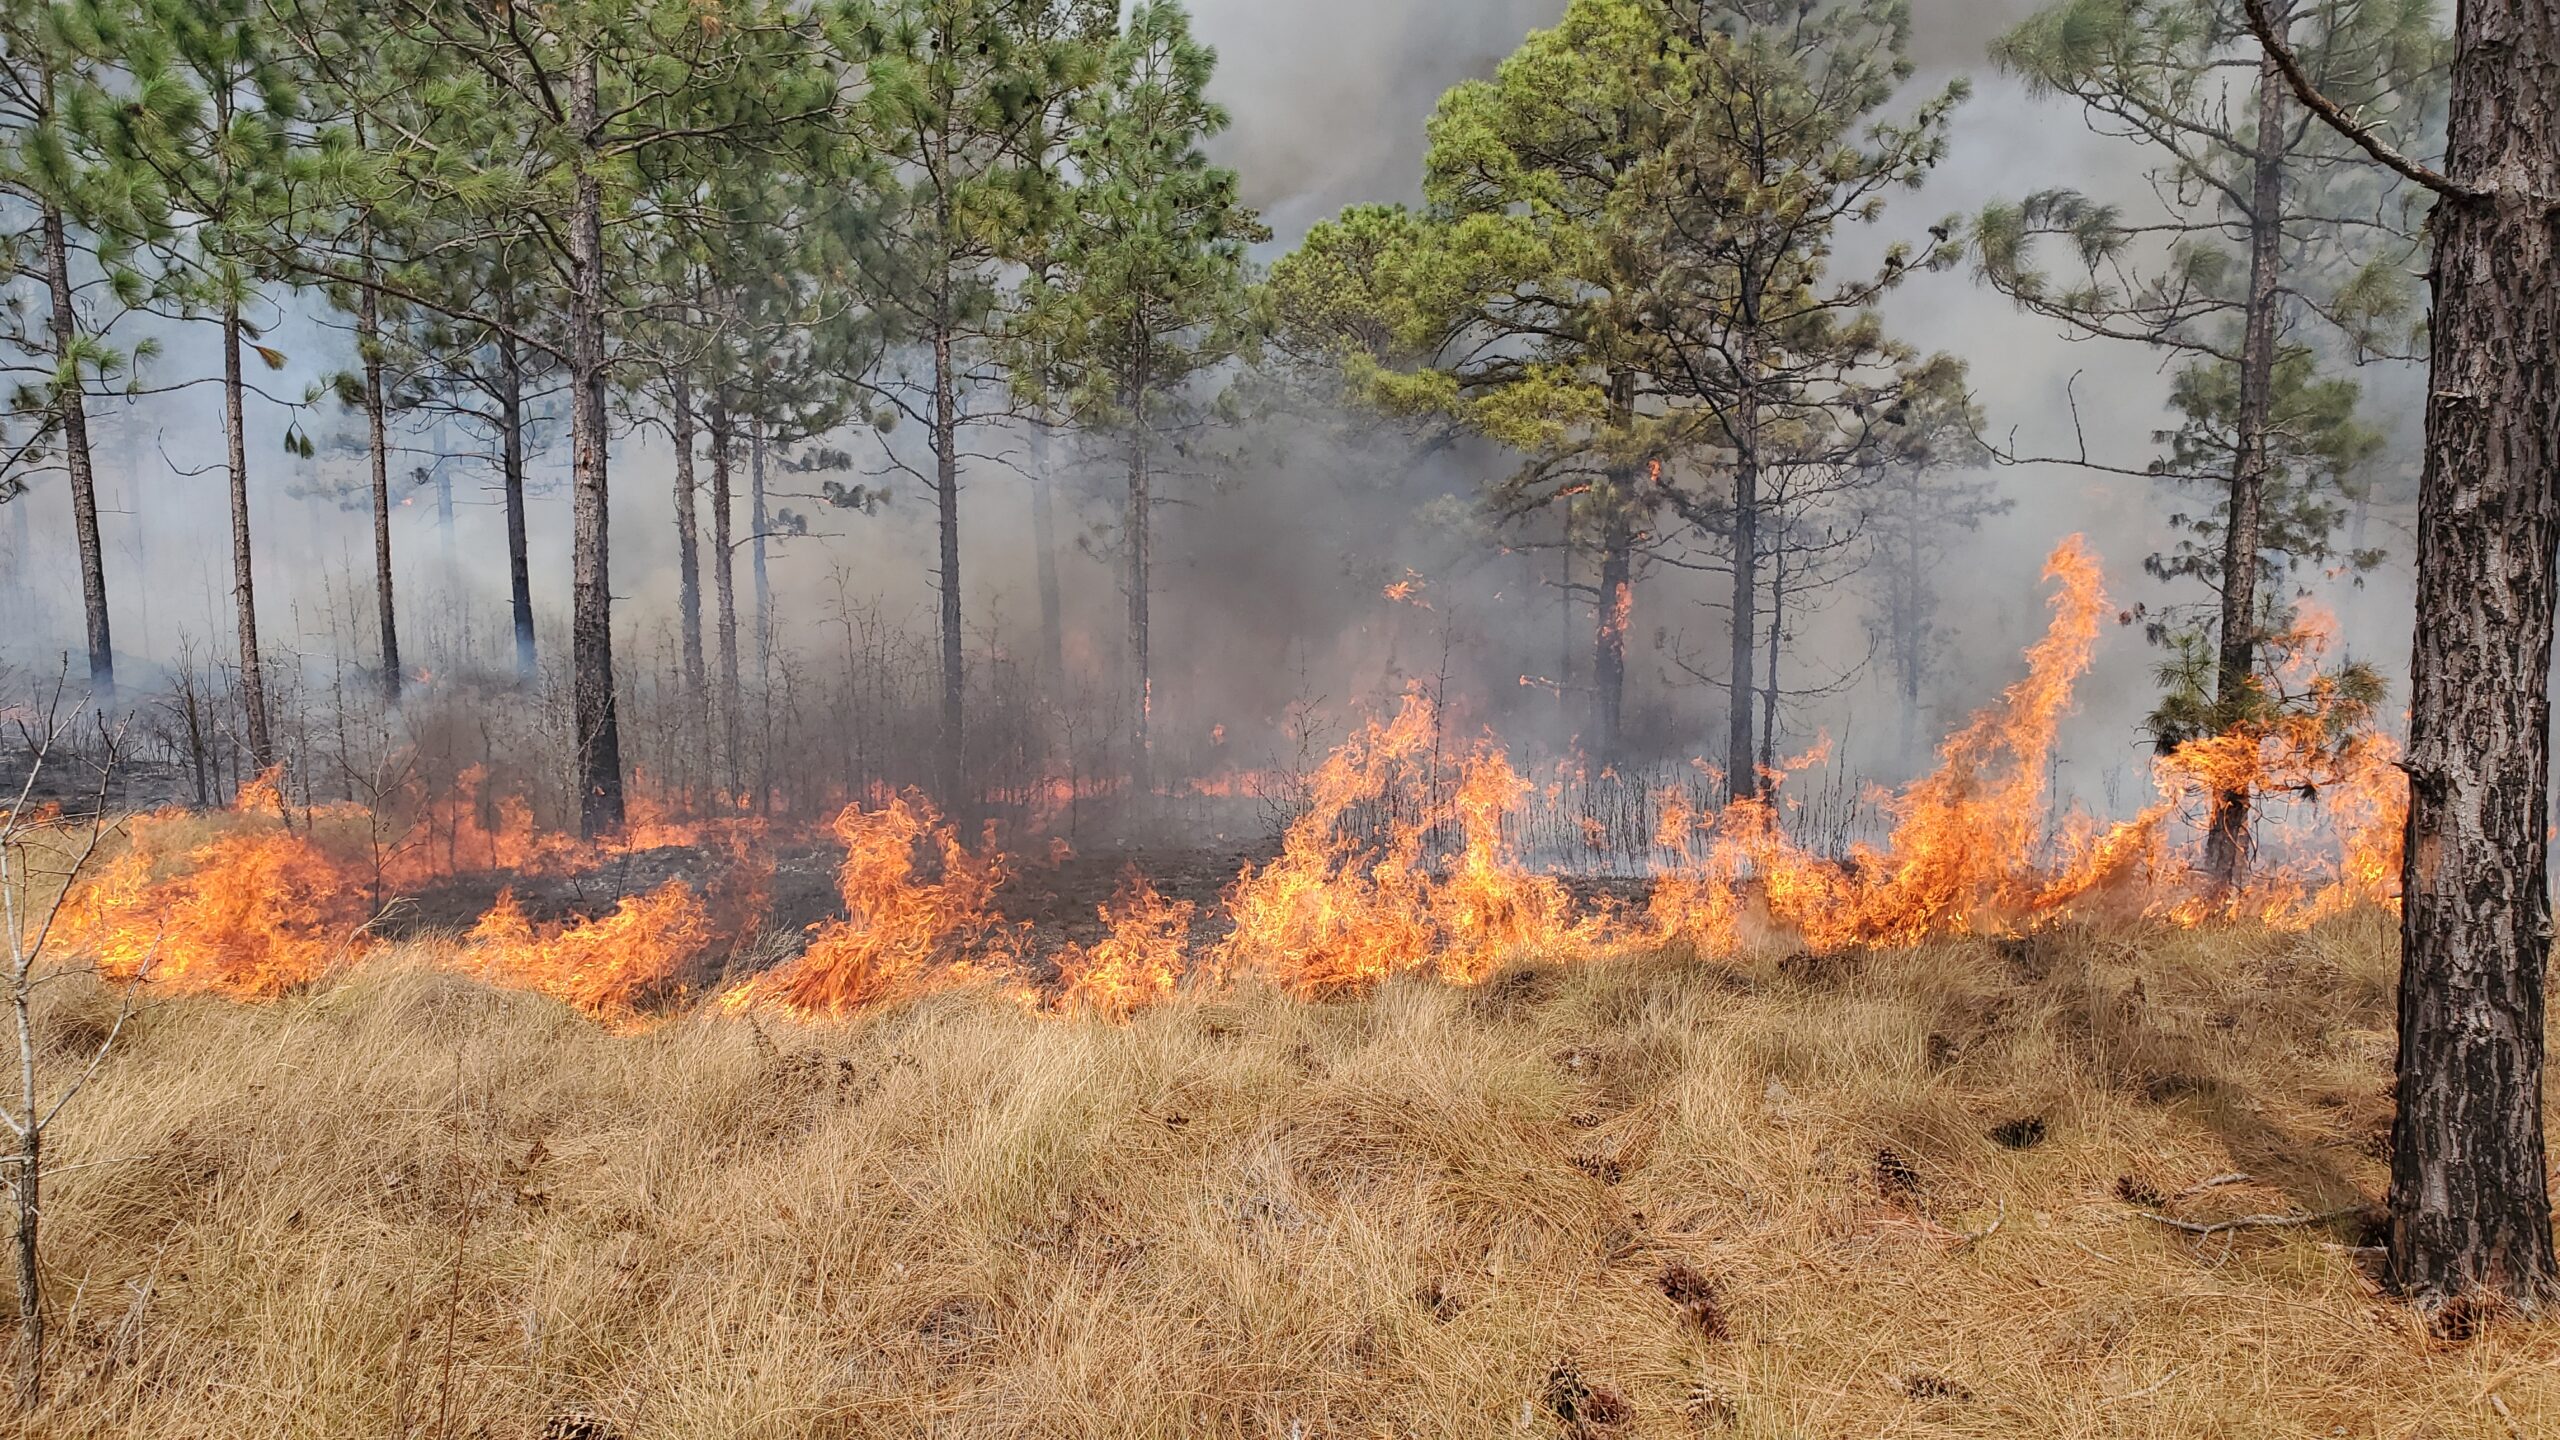 Fire burns the grass under longleaf pine trees.